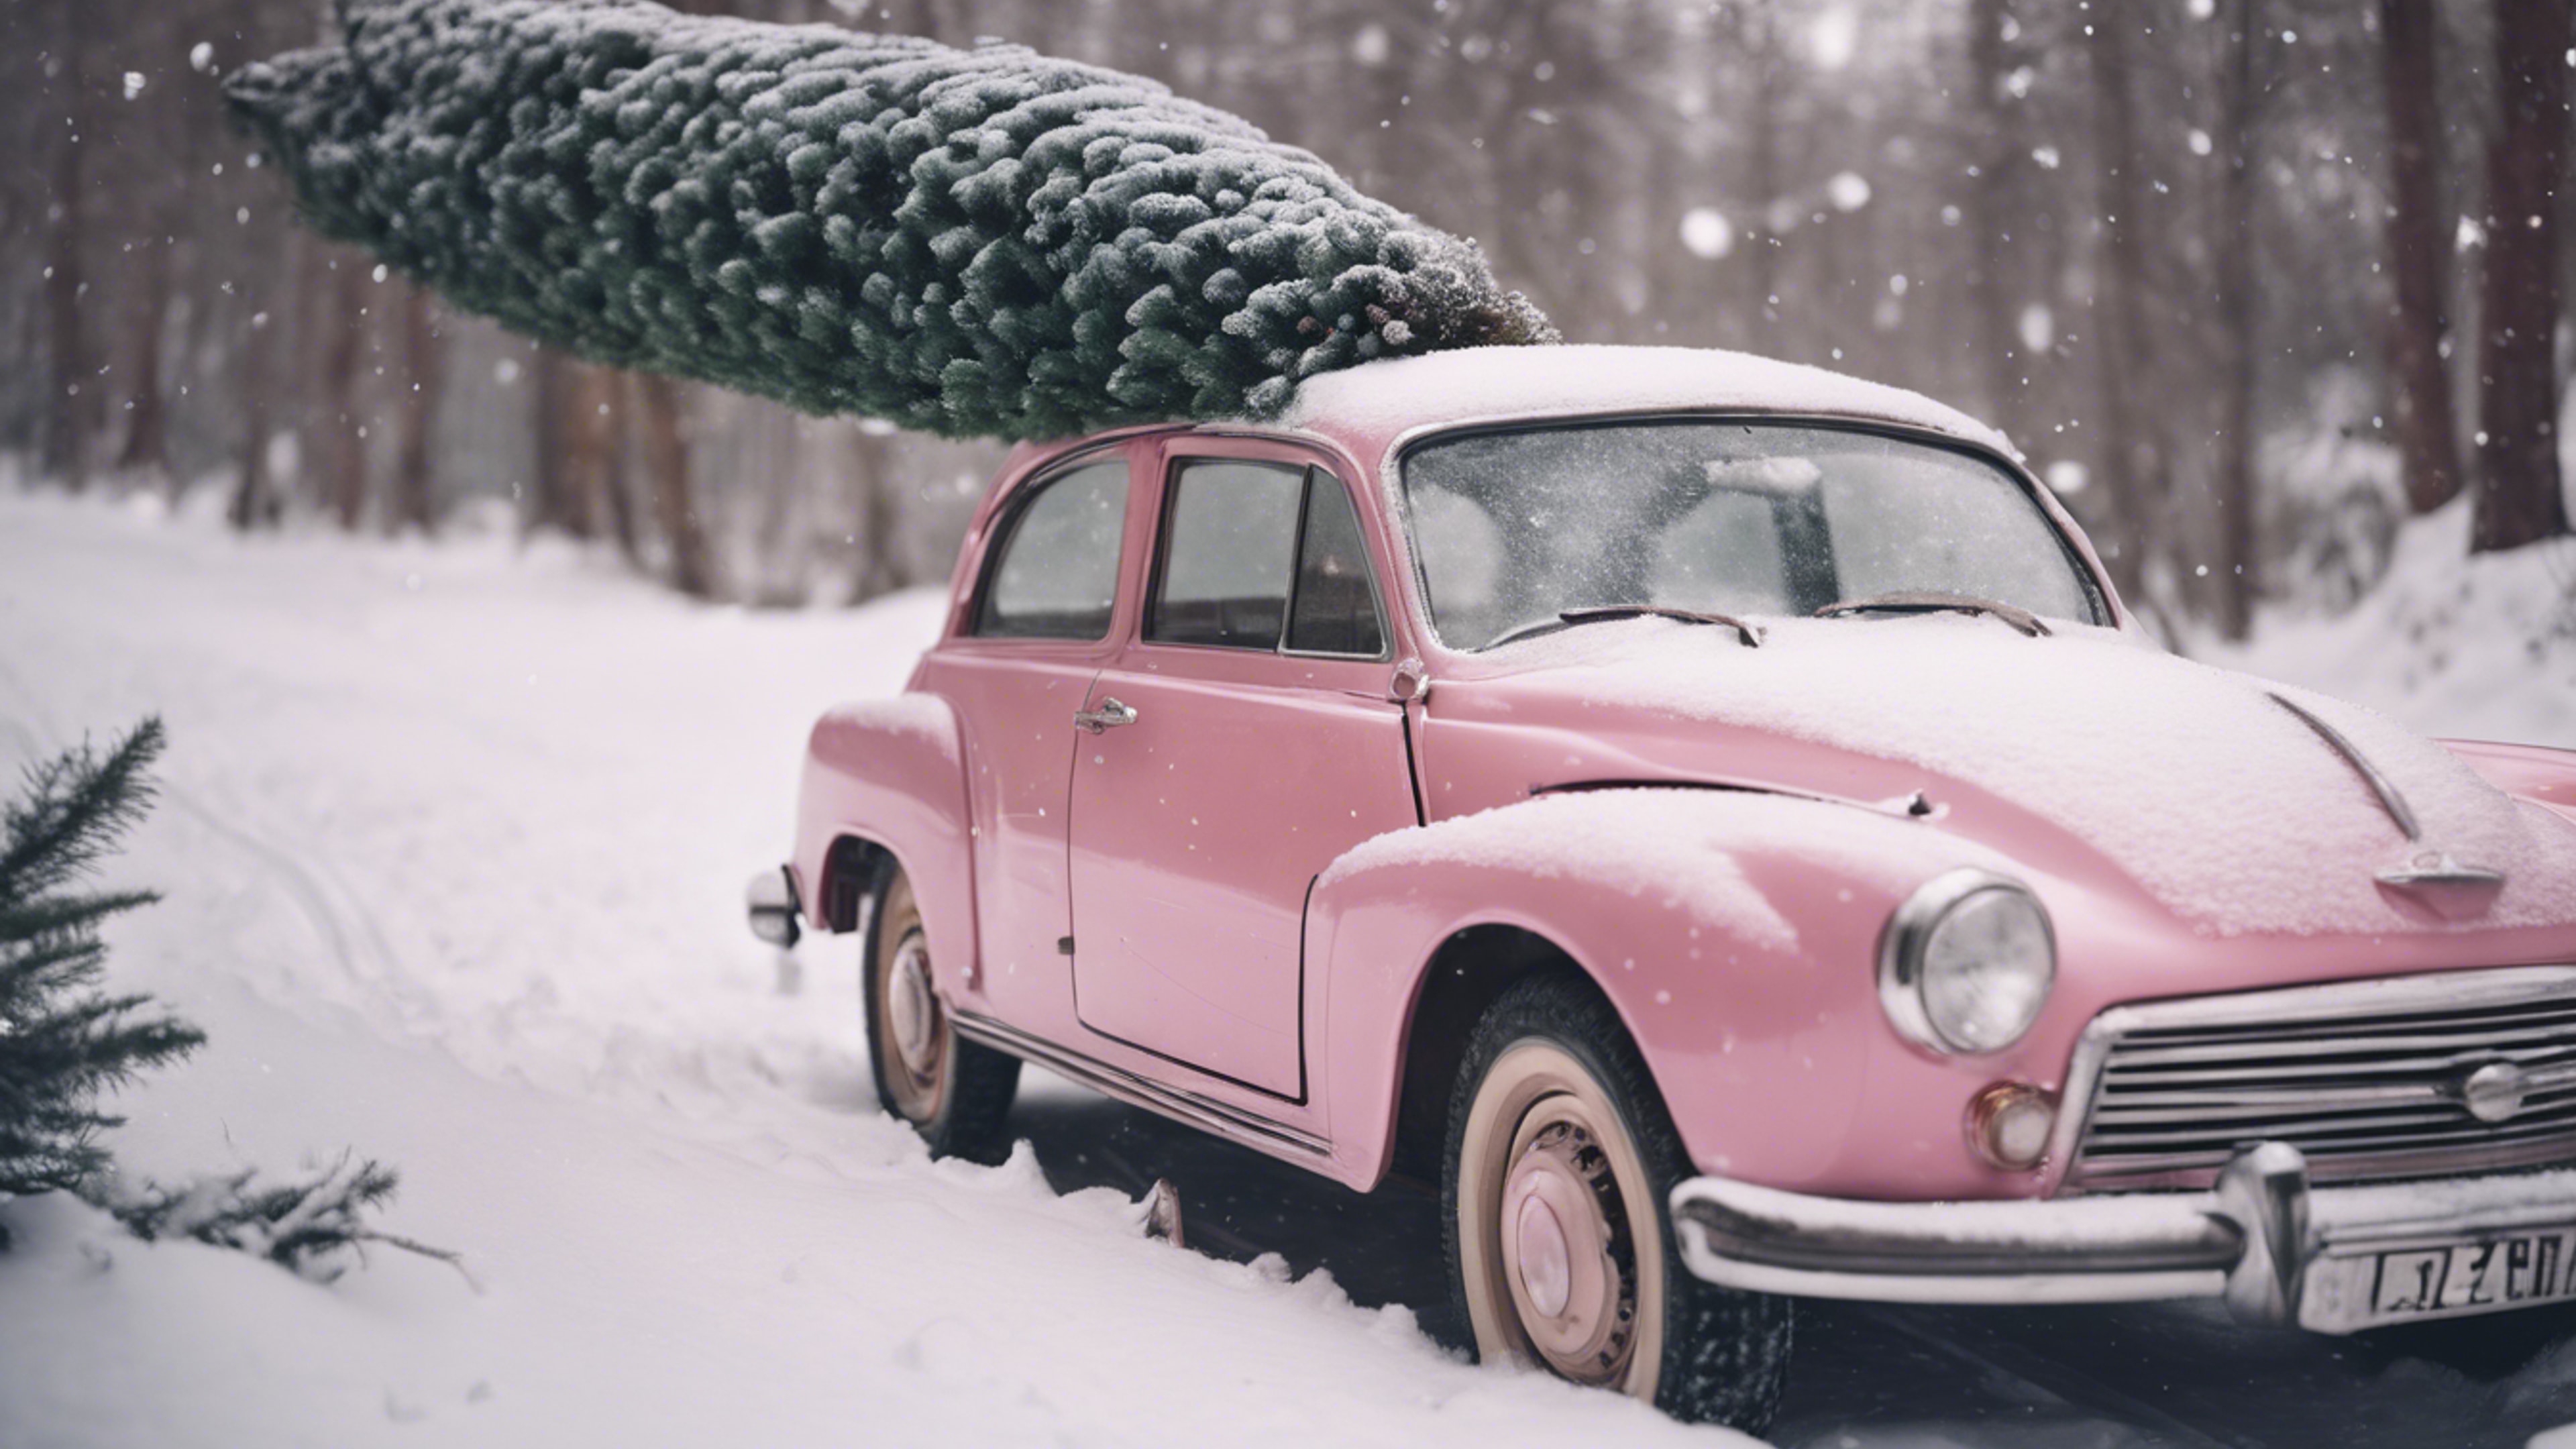 A retro pink car carrying a freshly cut Christmas tree on snowy roads. 벽지[b34e85bc5da446a1b888]